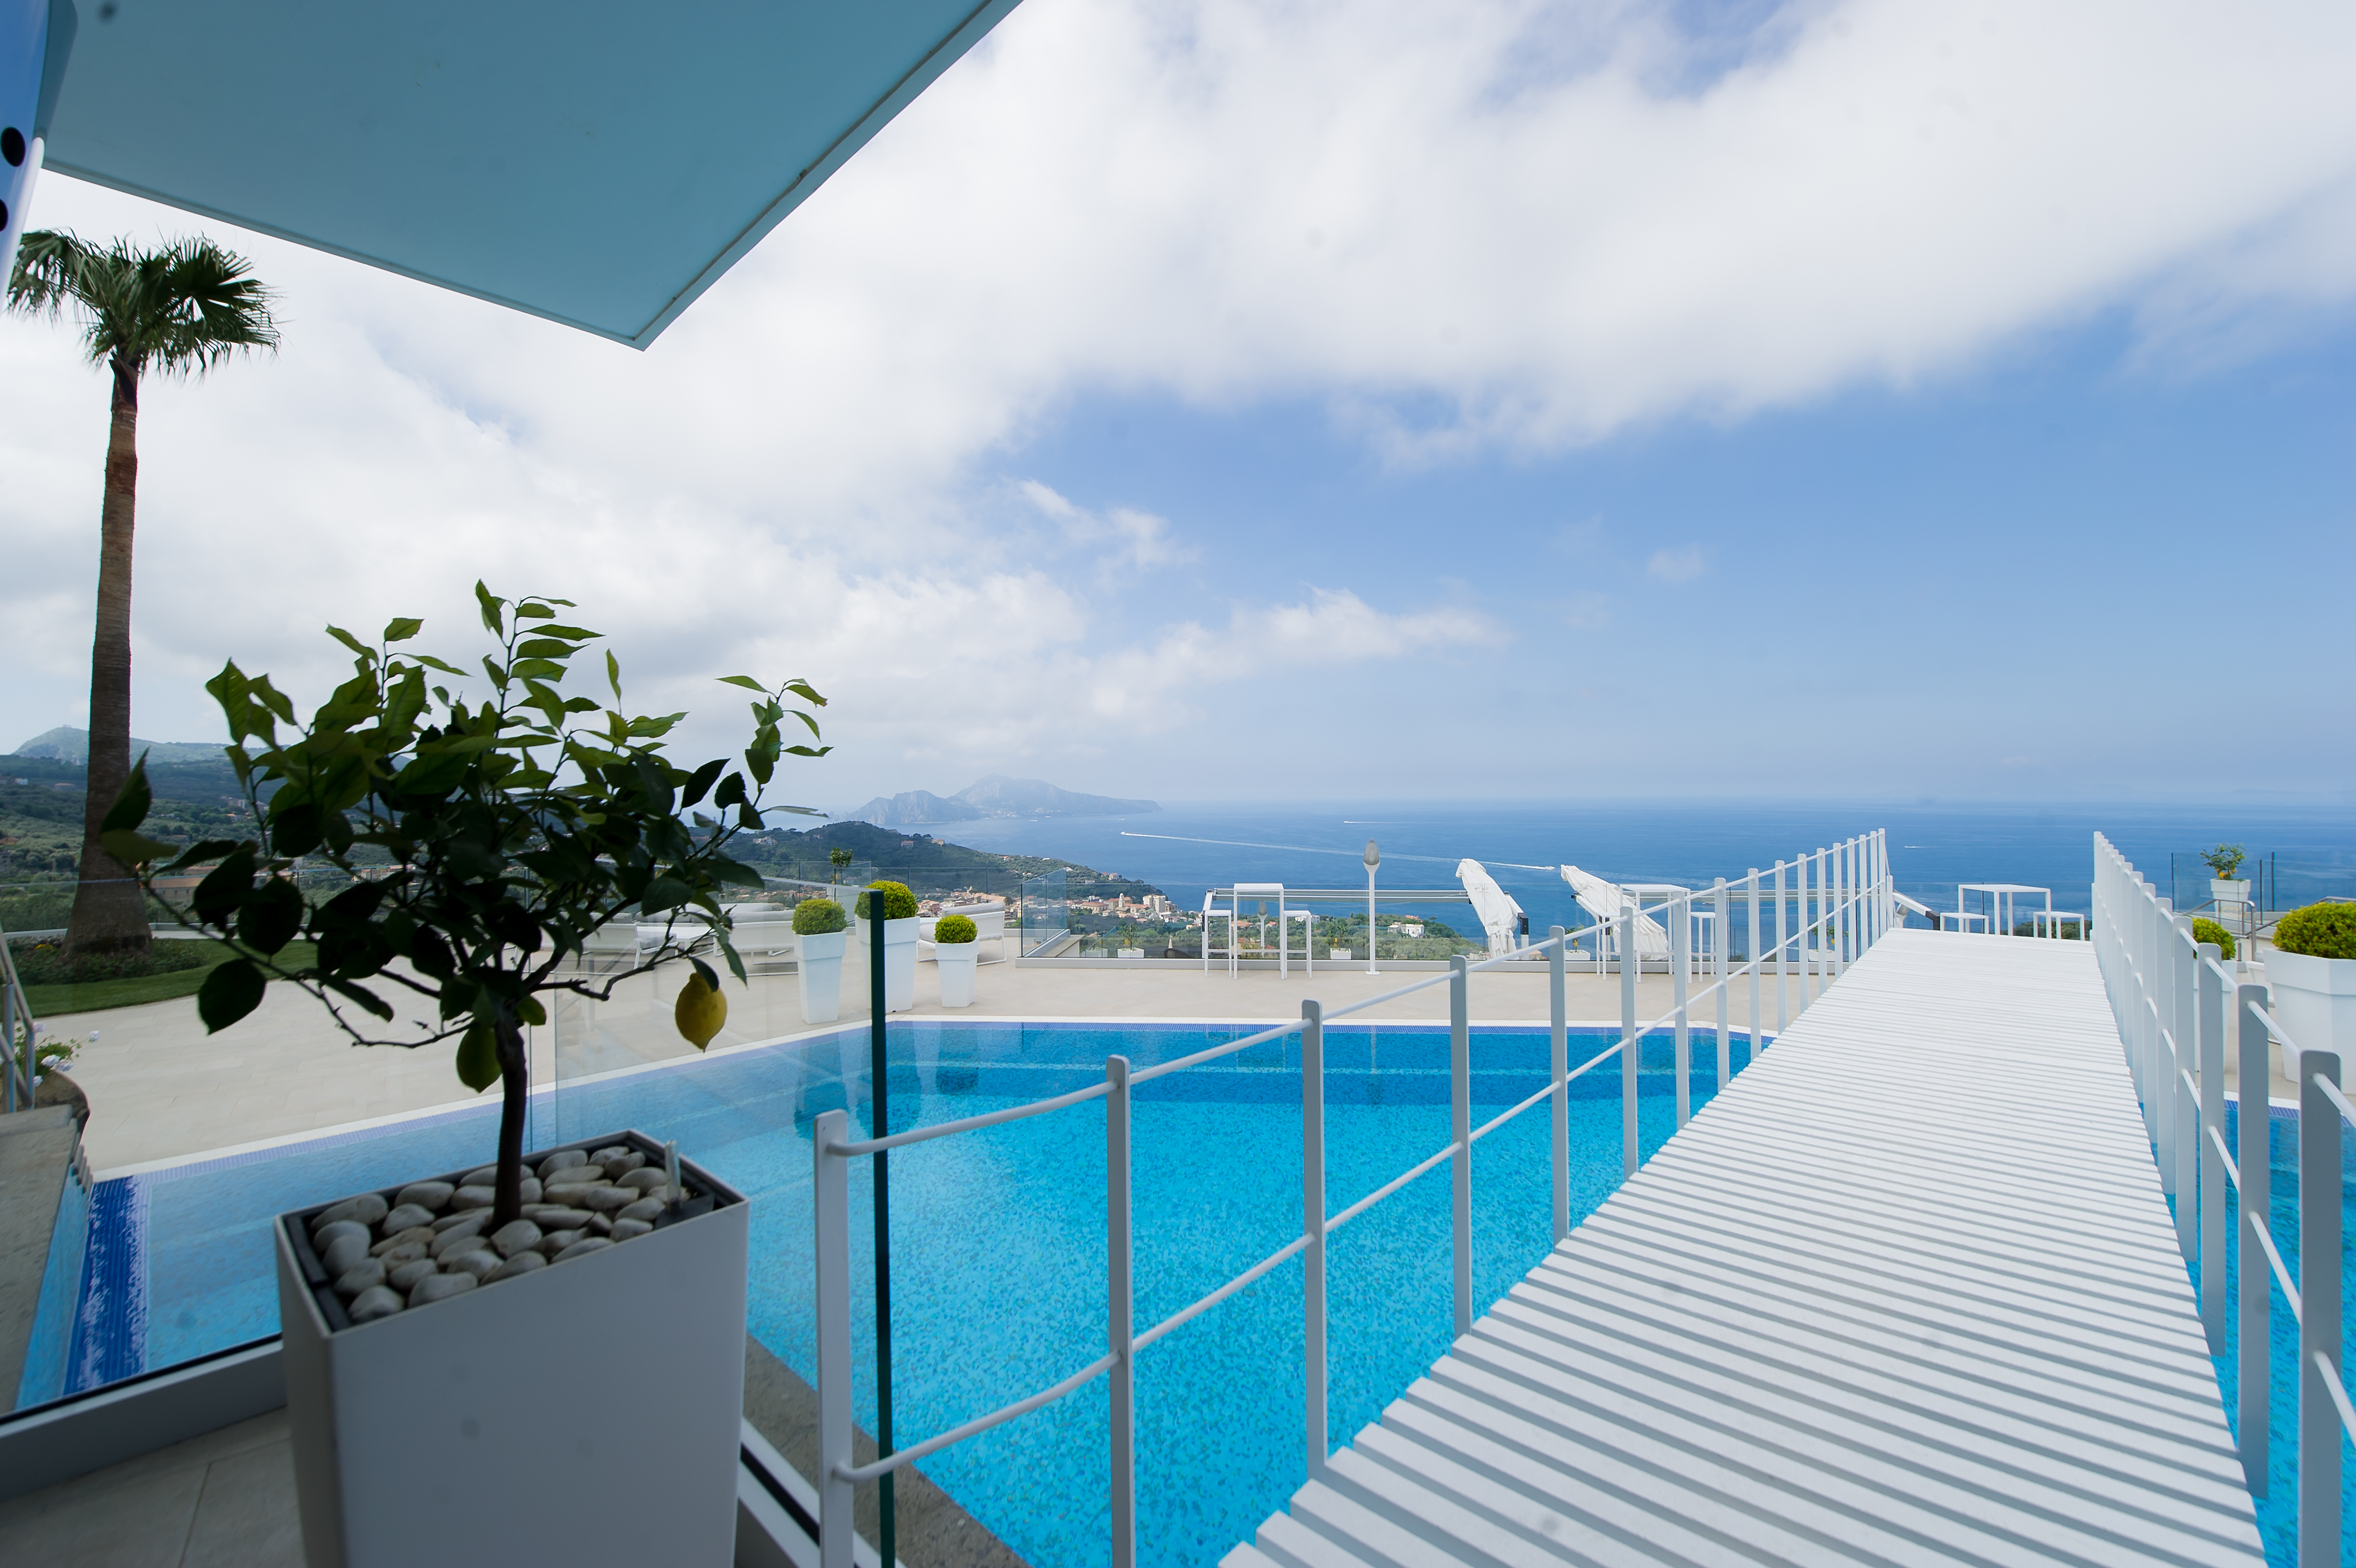 Villa Sorrento with swimming pool